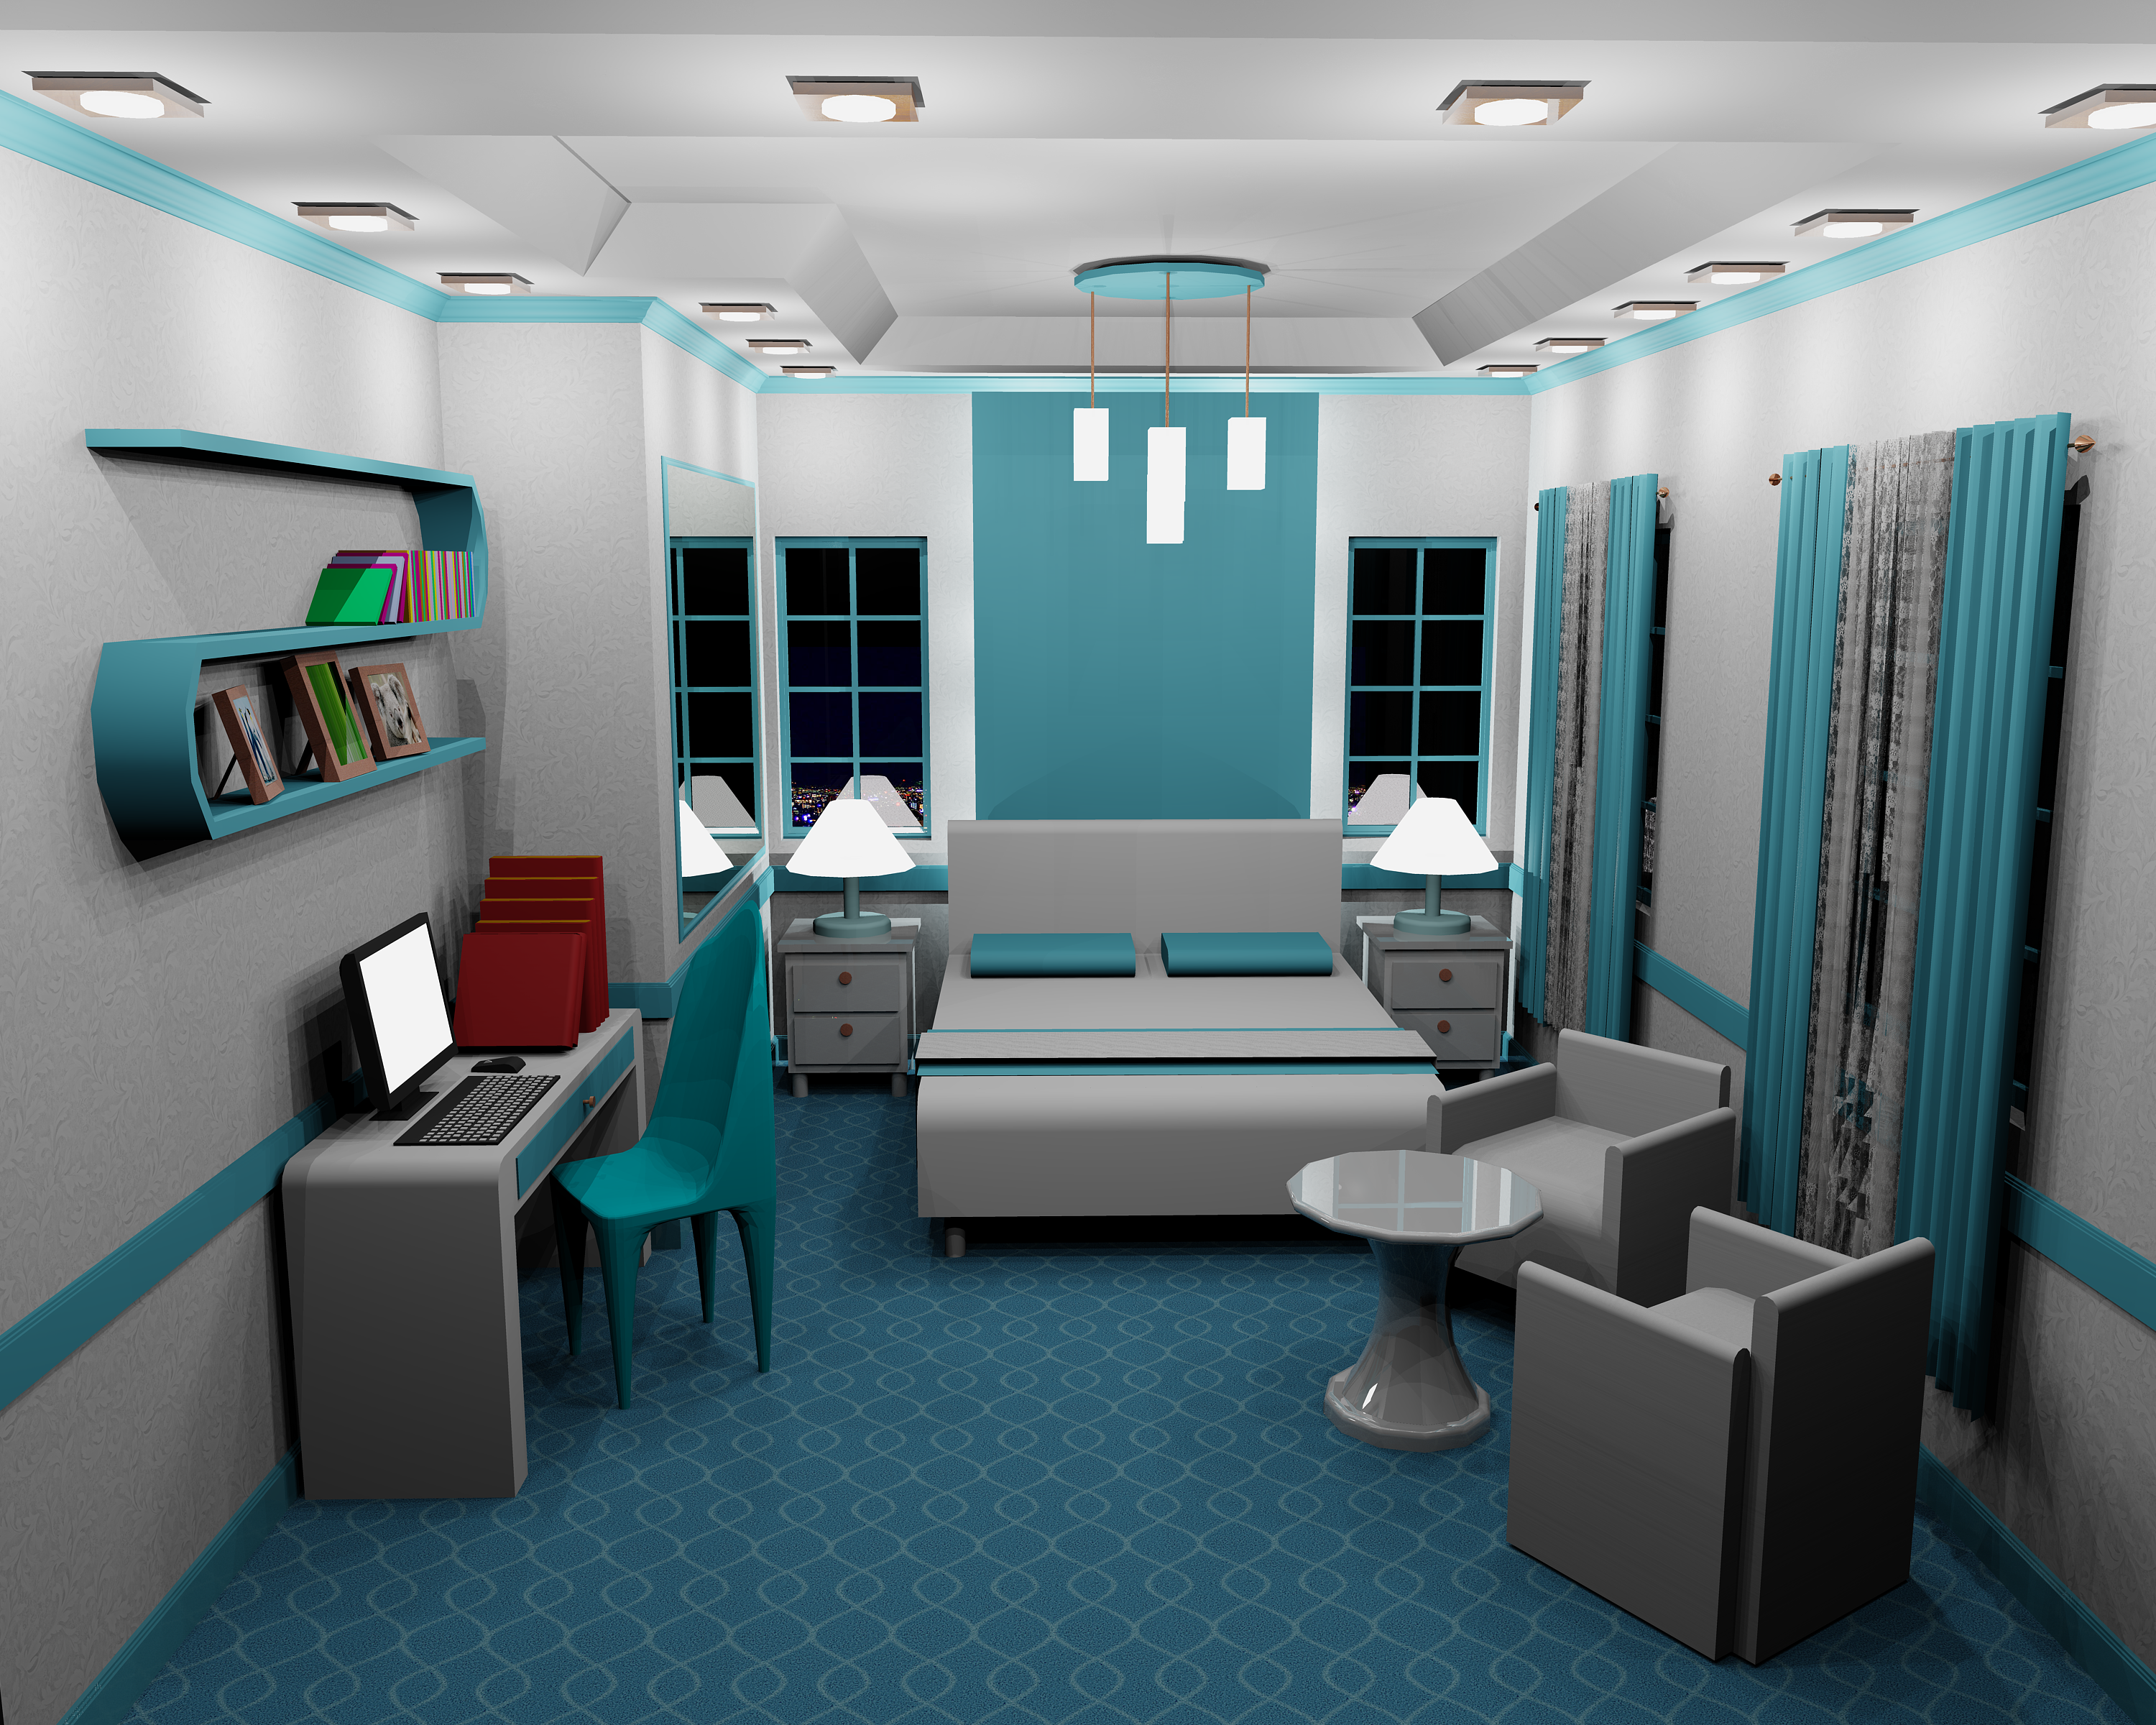 3D Interior design using AutoCAD by IamHulyeta on DeviantArt